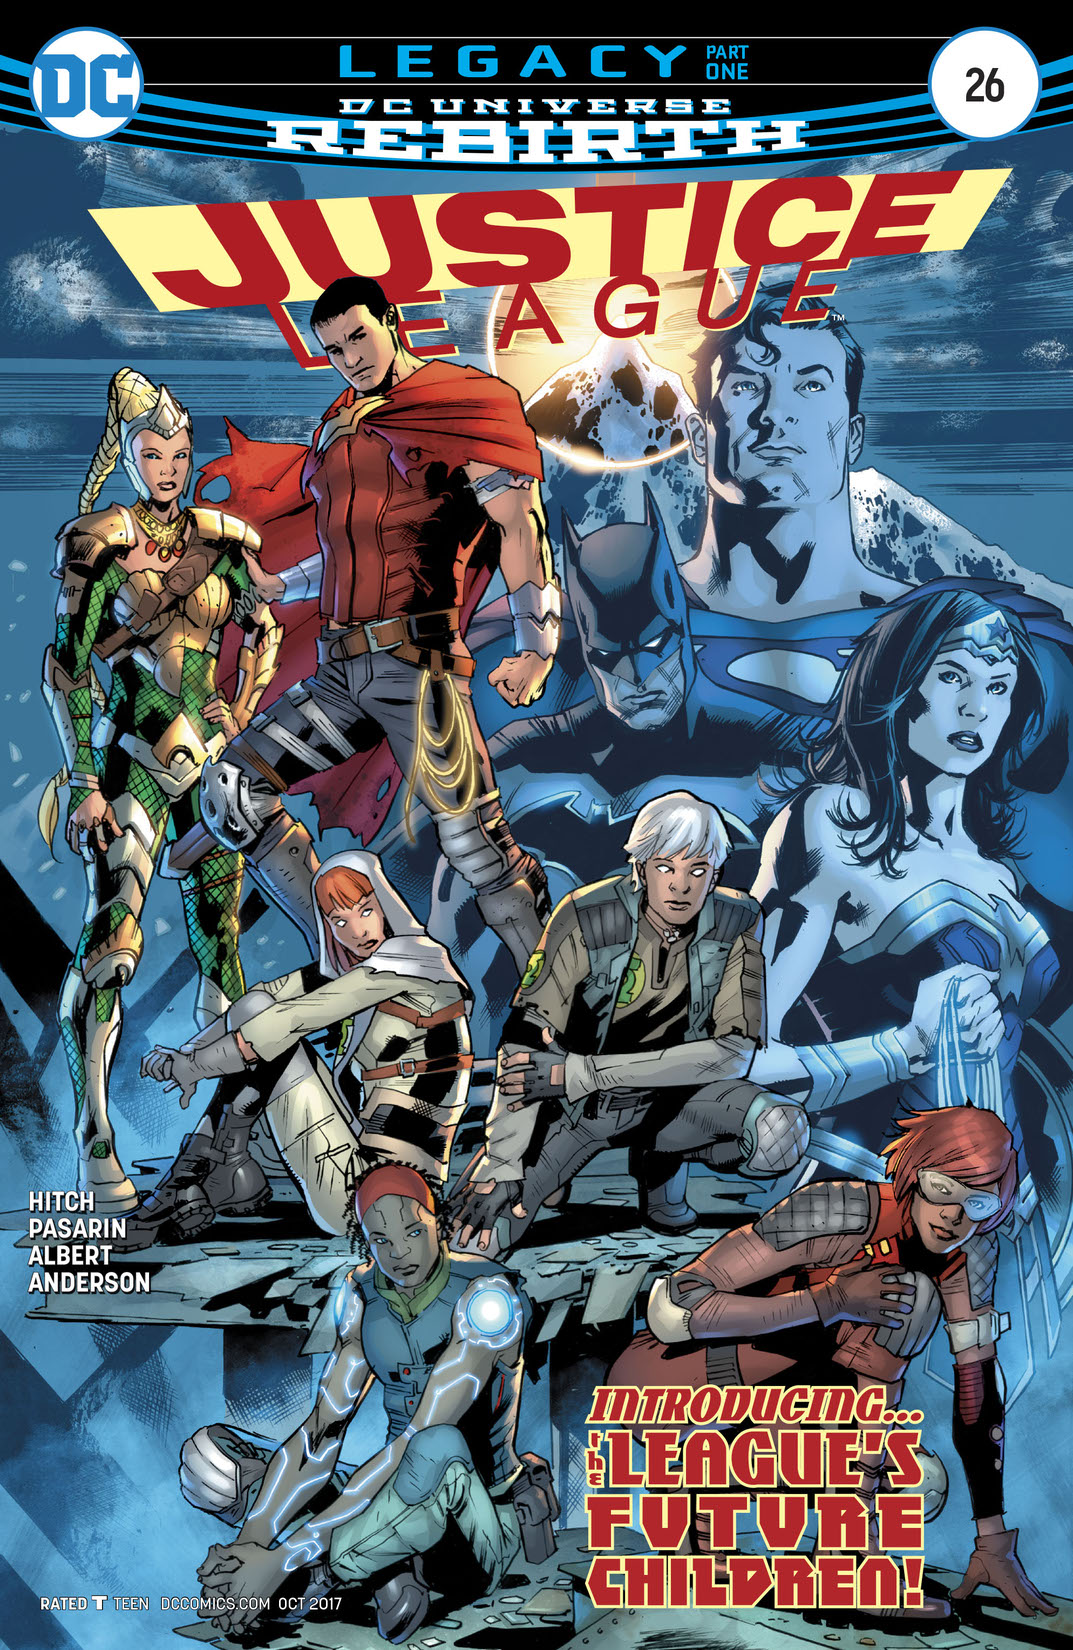 Justice League (2016-) #26 preview images